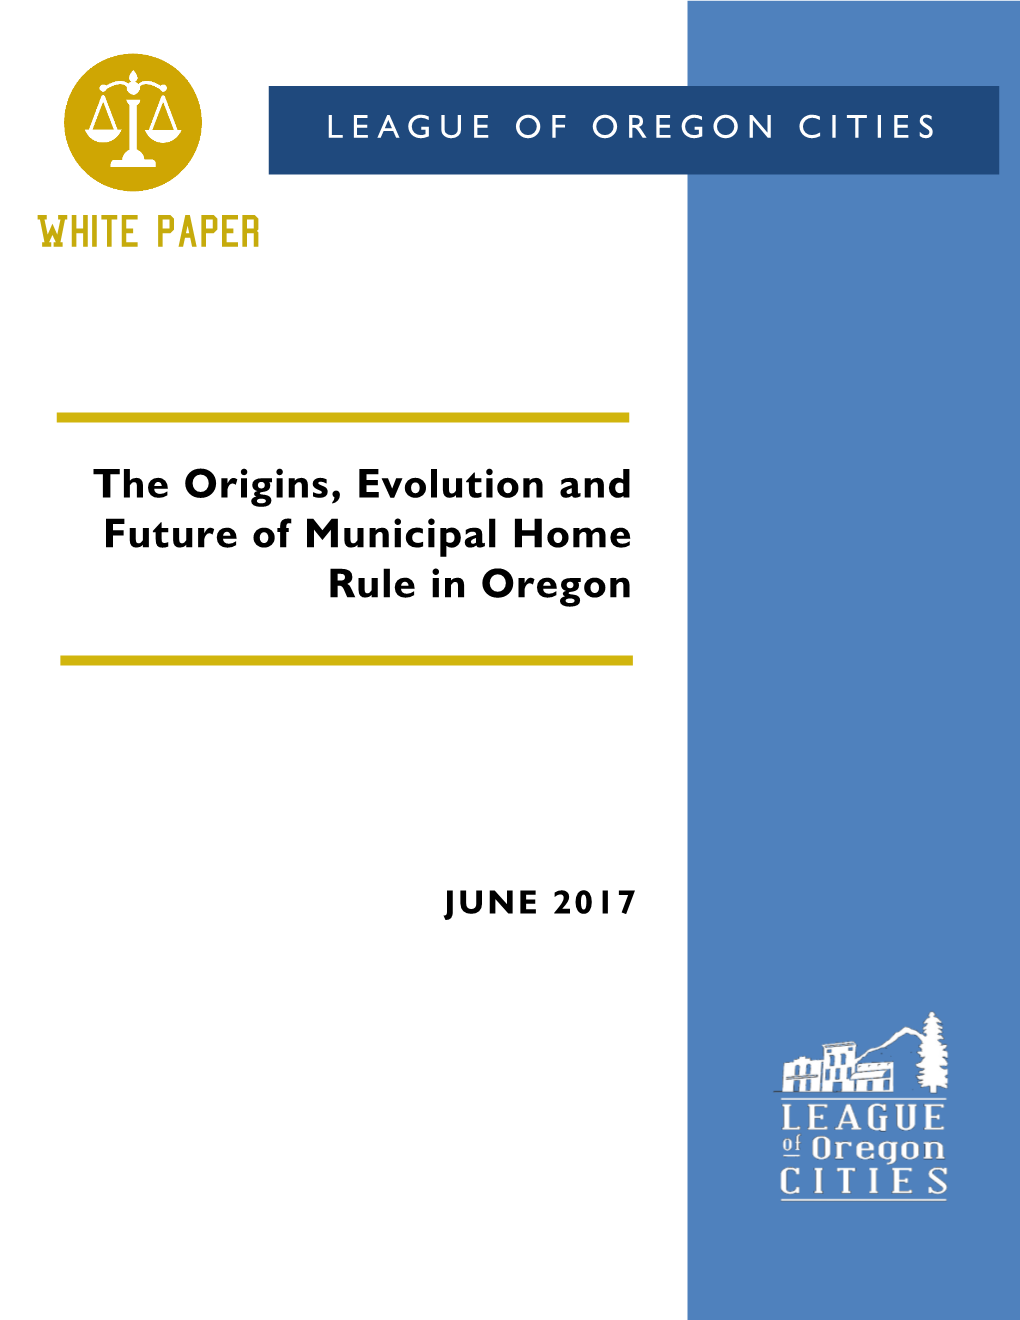 White Paper: the Origins, Evolution & Future of Municipal Home Rule In